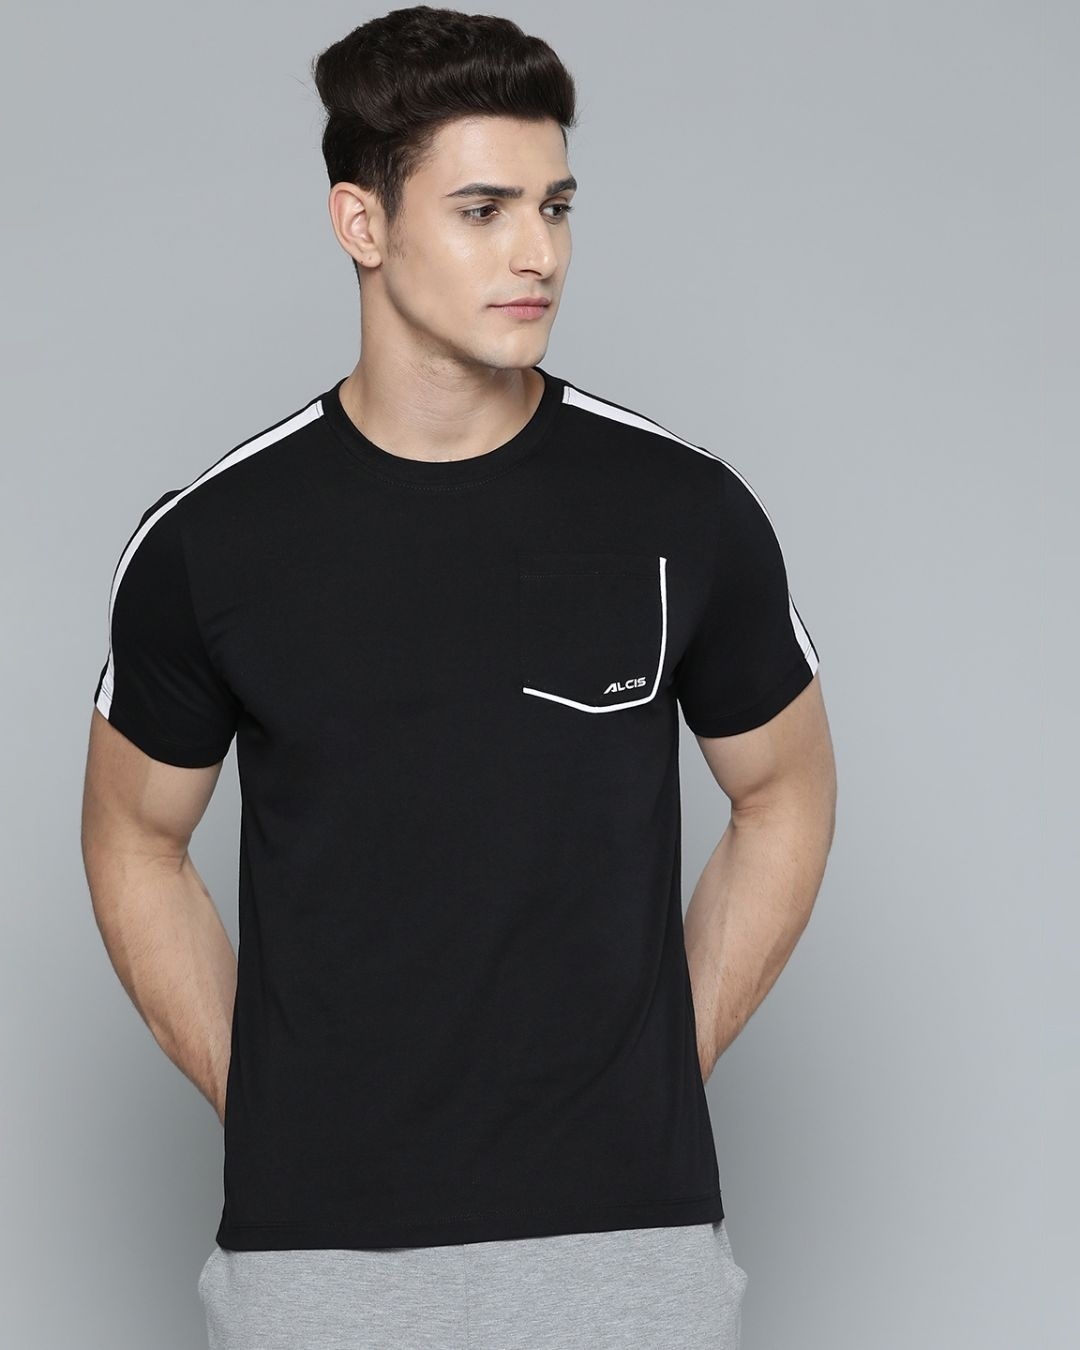 Buy Men's Black & White Slim Fit Cotton T-shirt for Men Black Online at ...